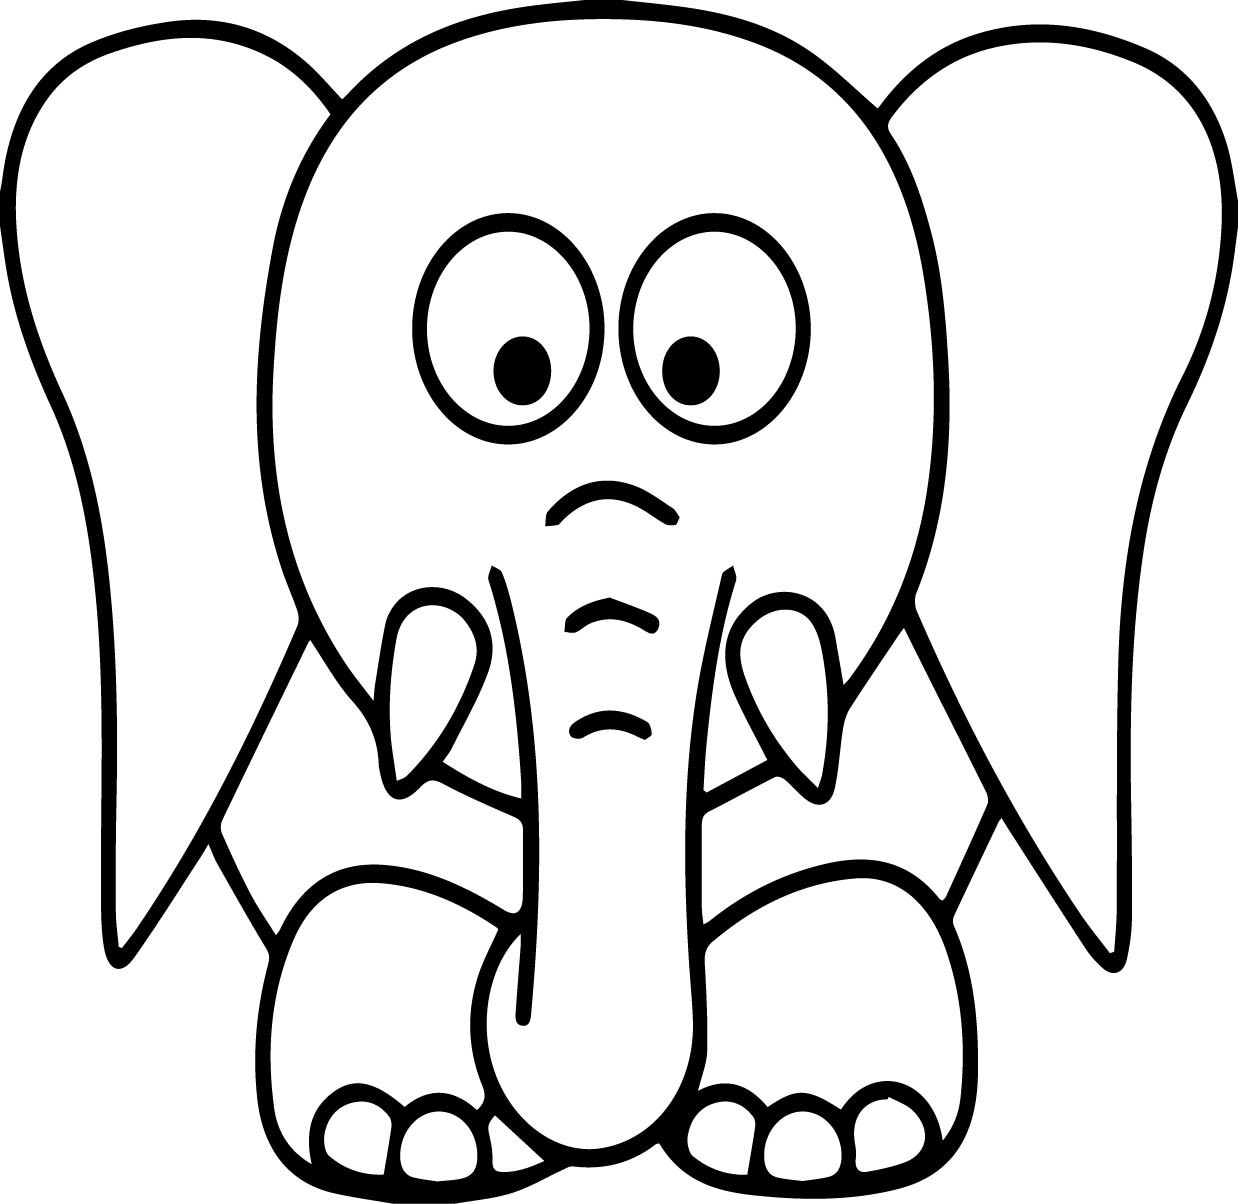 Elephant Coloring Page 02 - Wecoloringpage.com